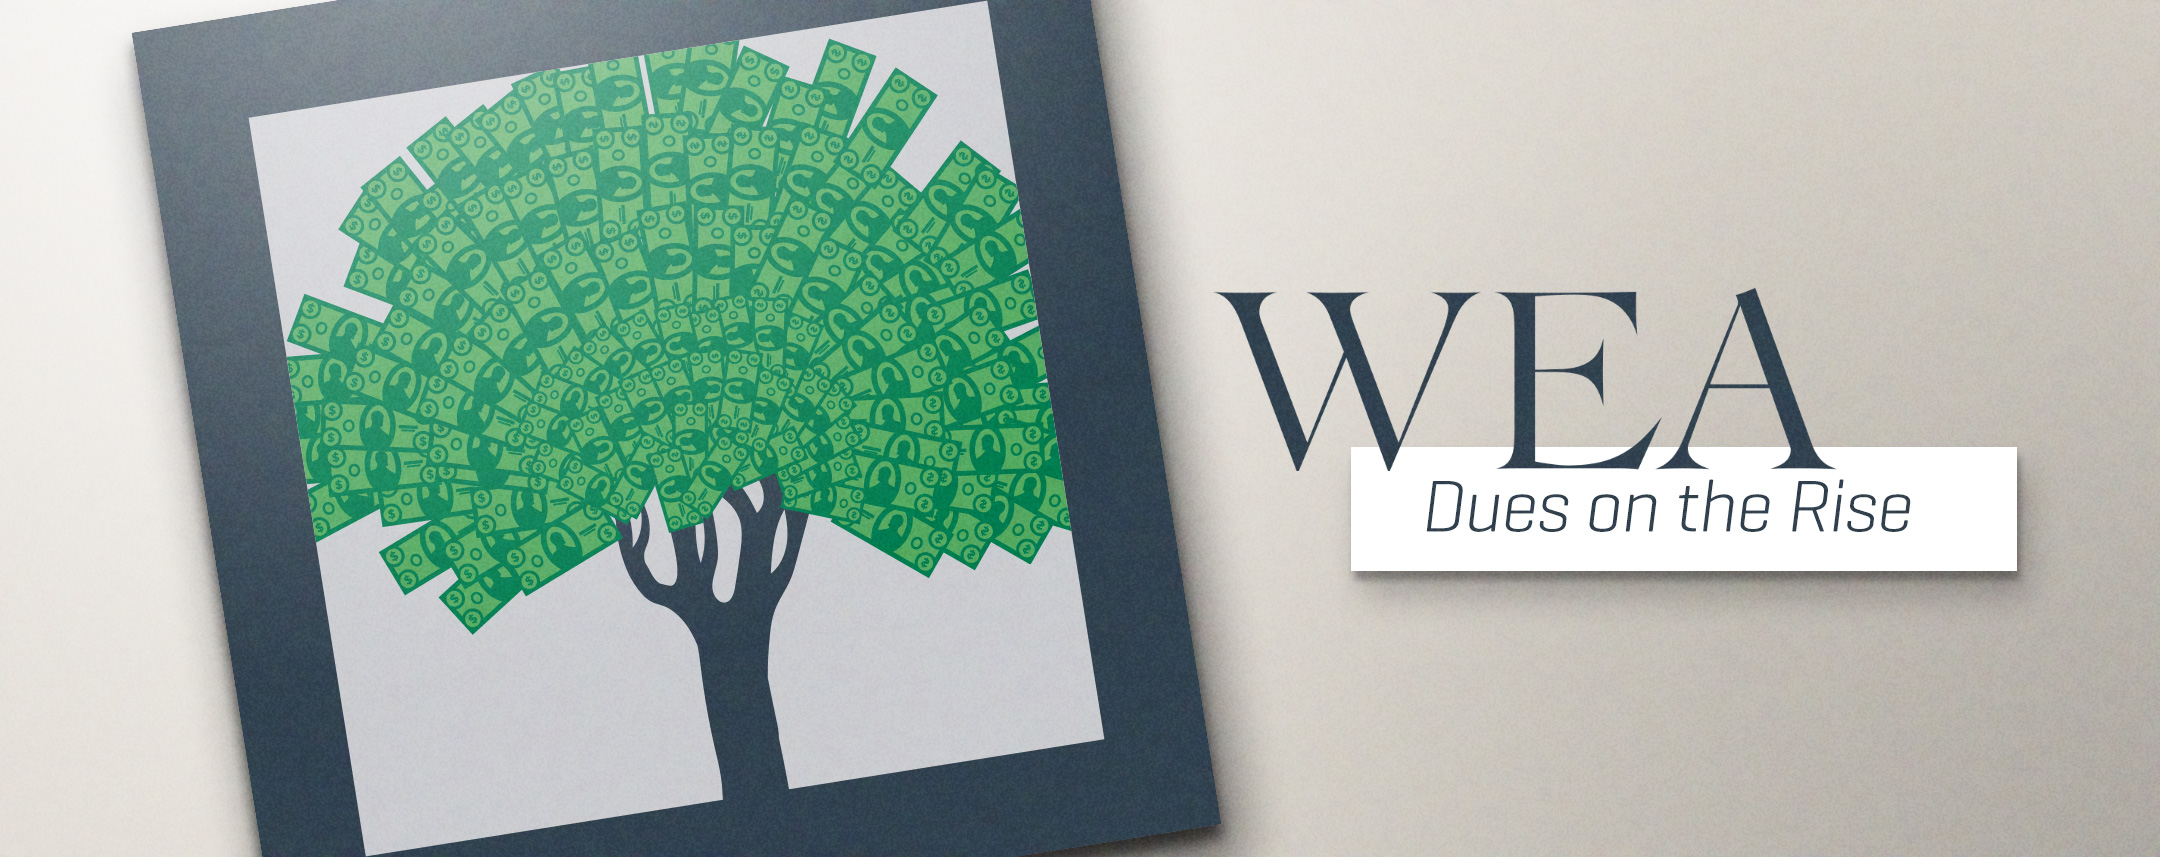 WEA-dues-2015-FEATURED.jpg